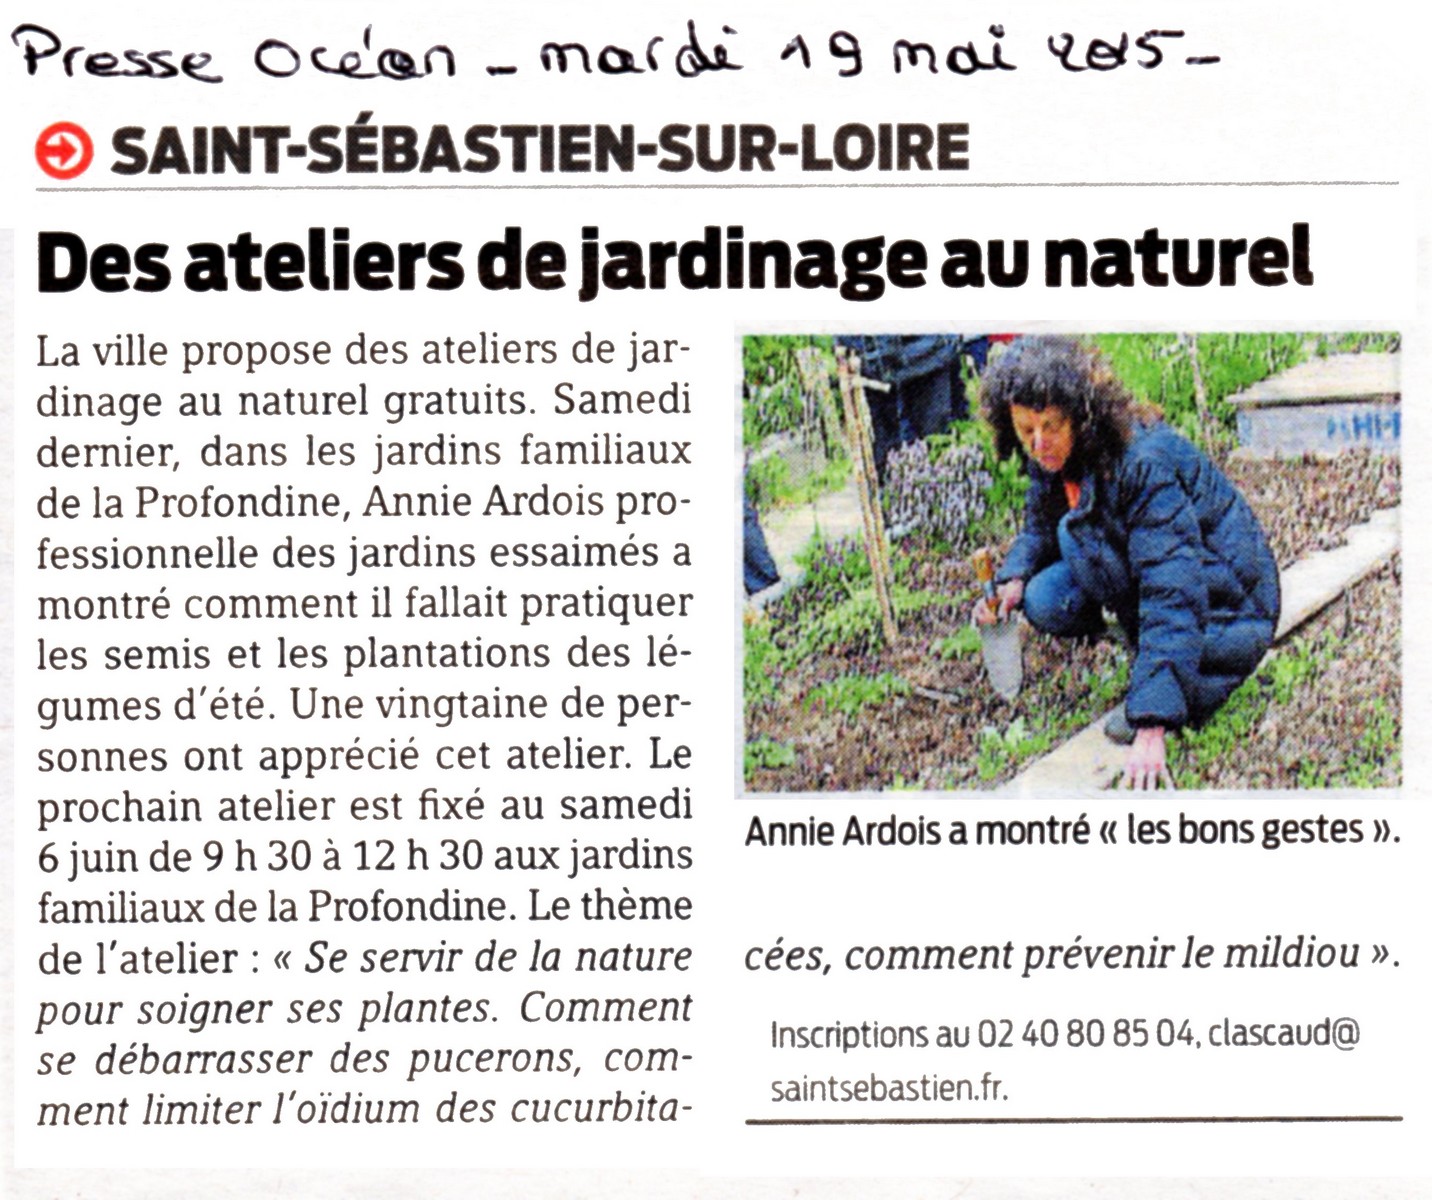 Article de Presse Océan "Des ateliers de jardinage au naturel"